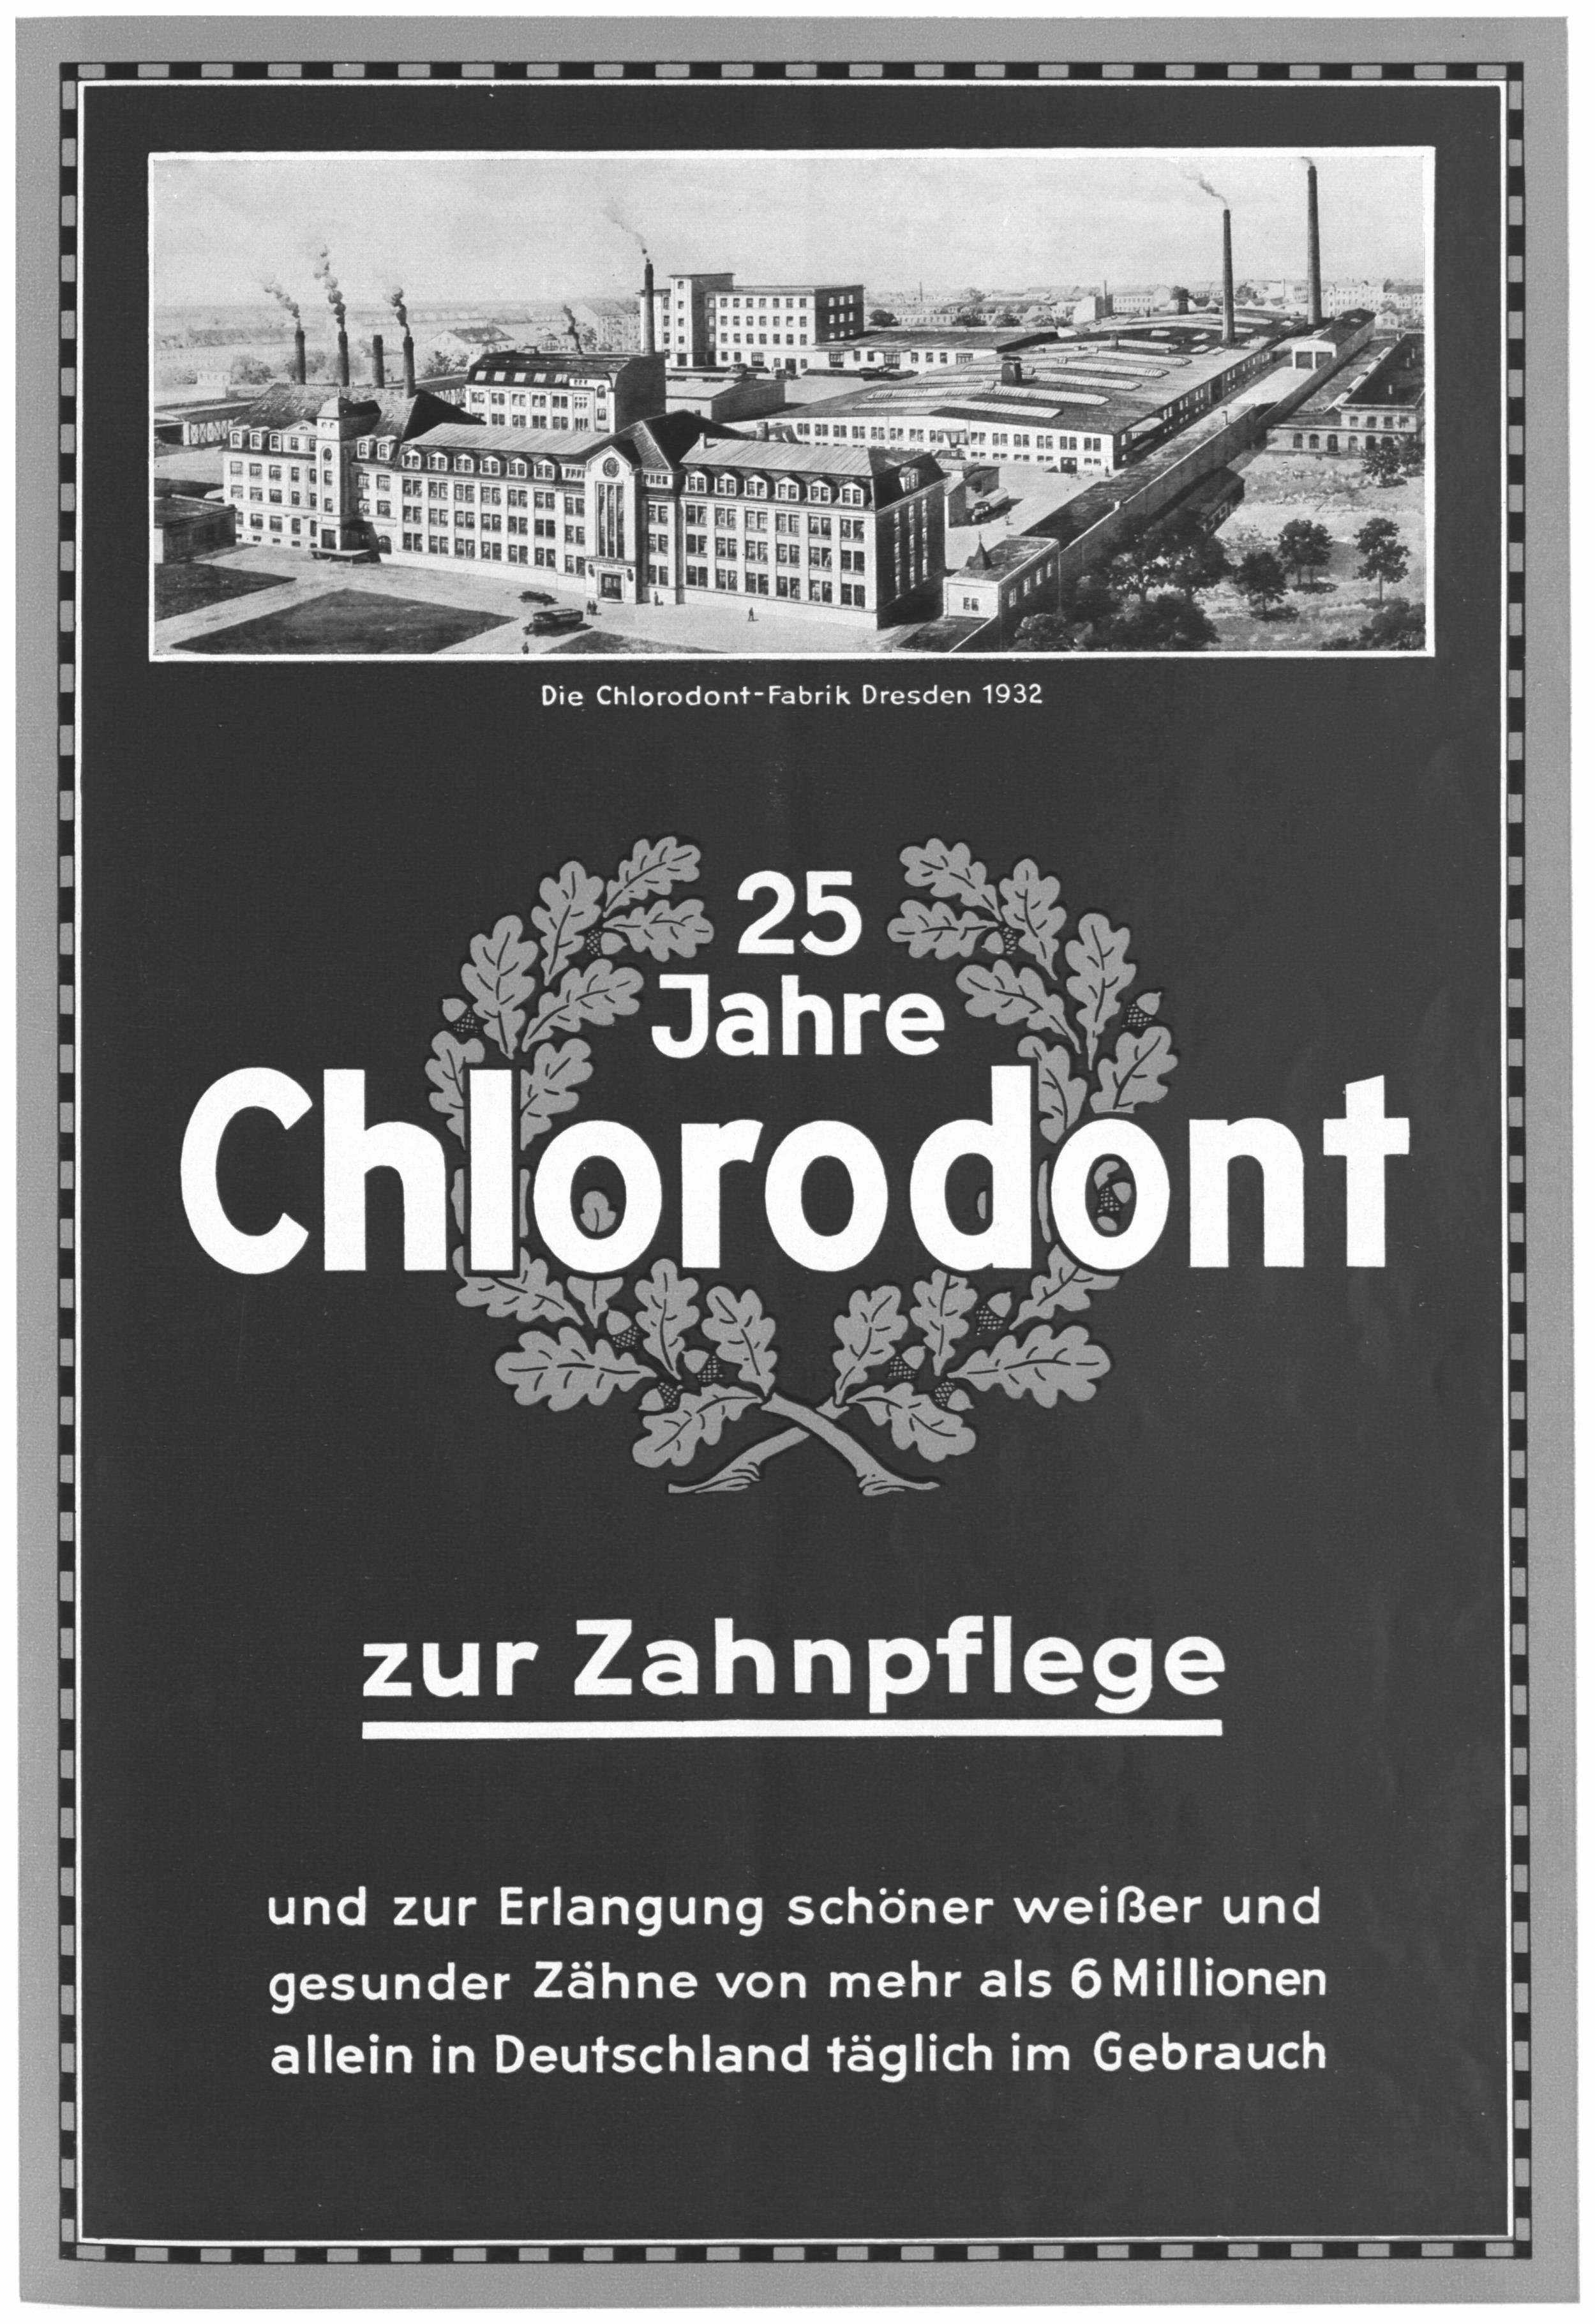 Chlorodont 1932 0.jpg